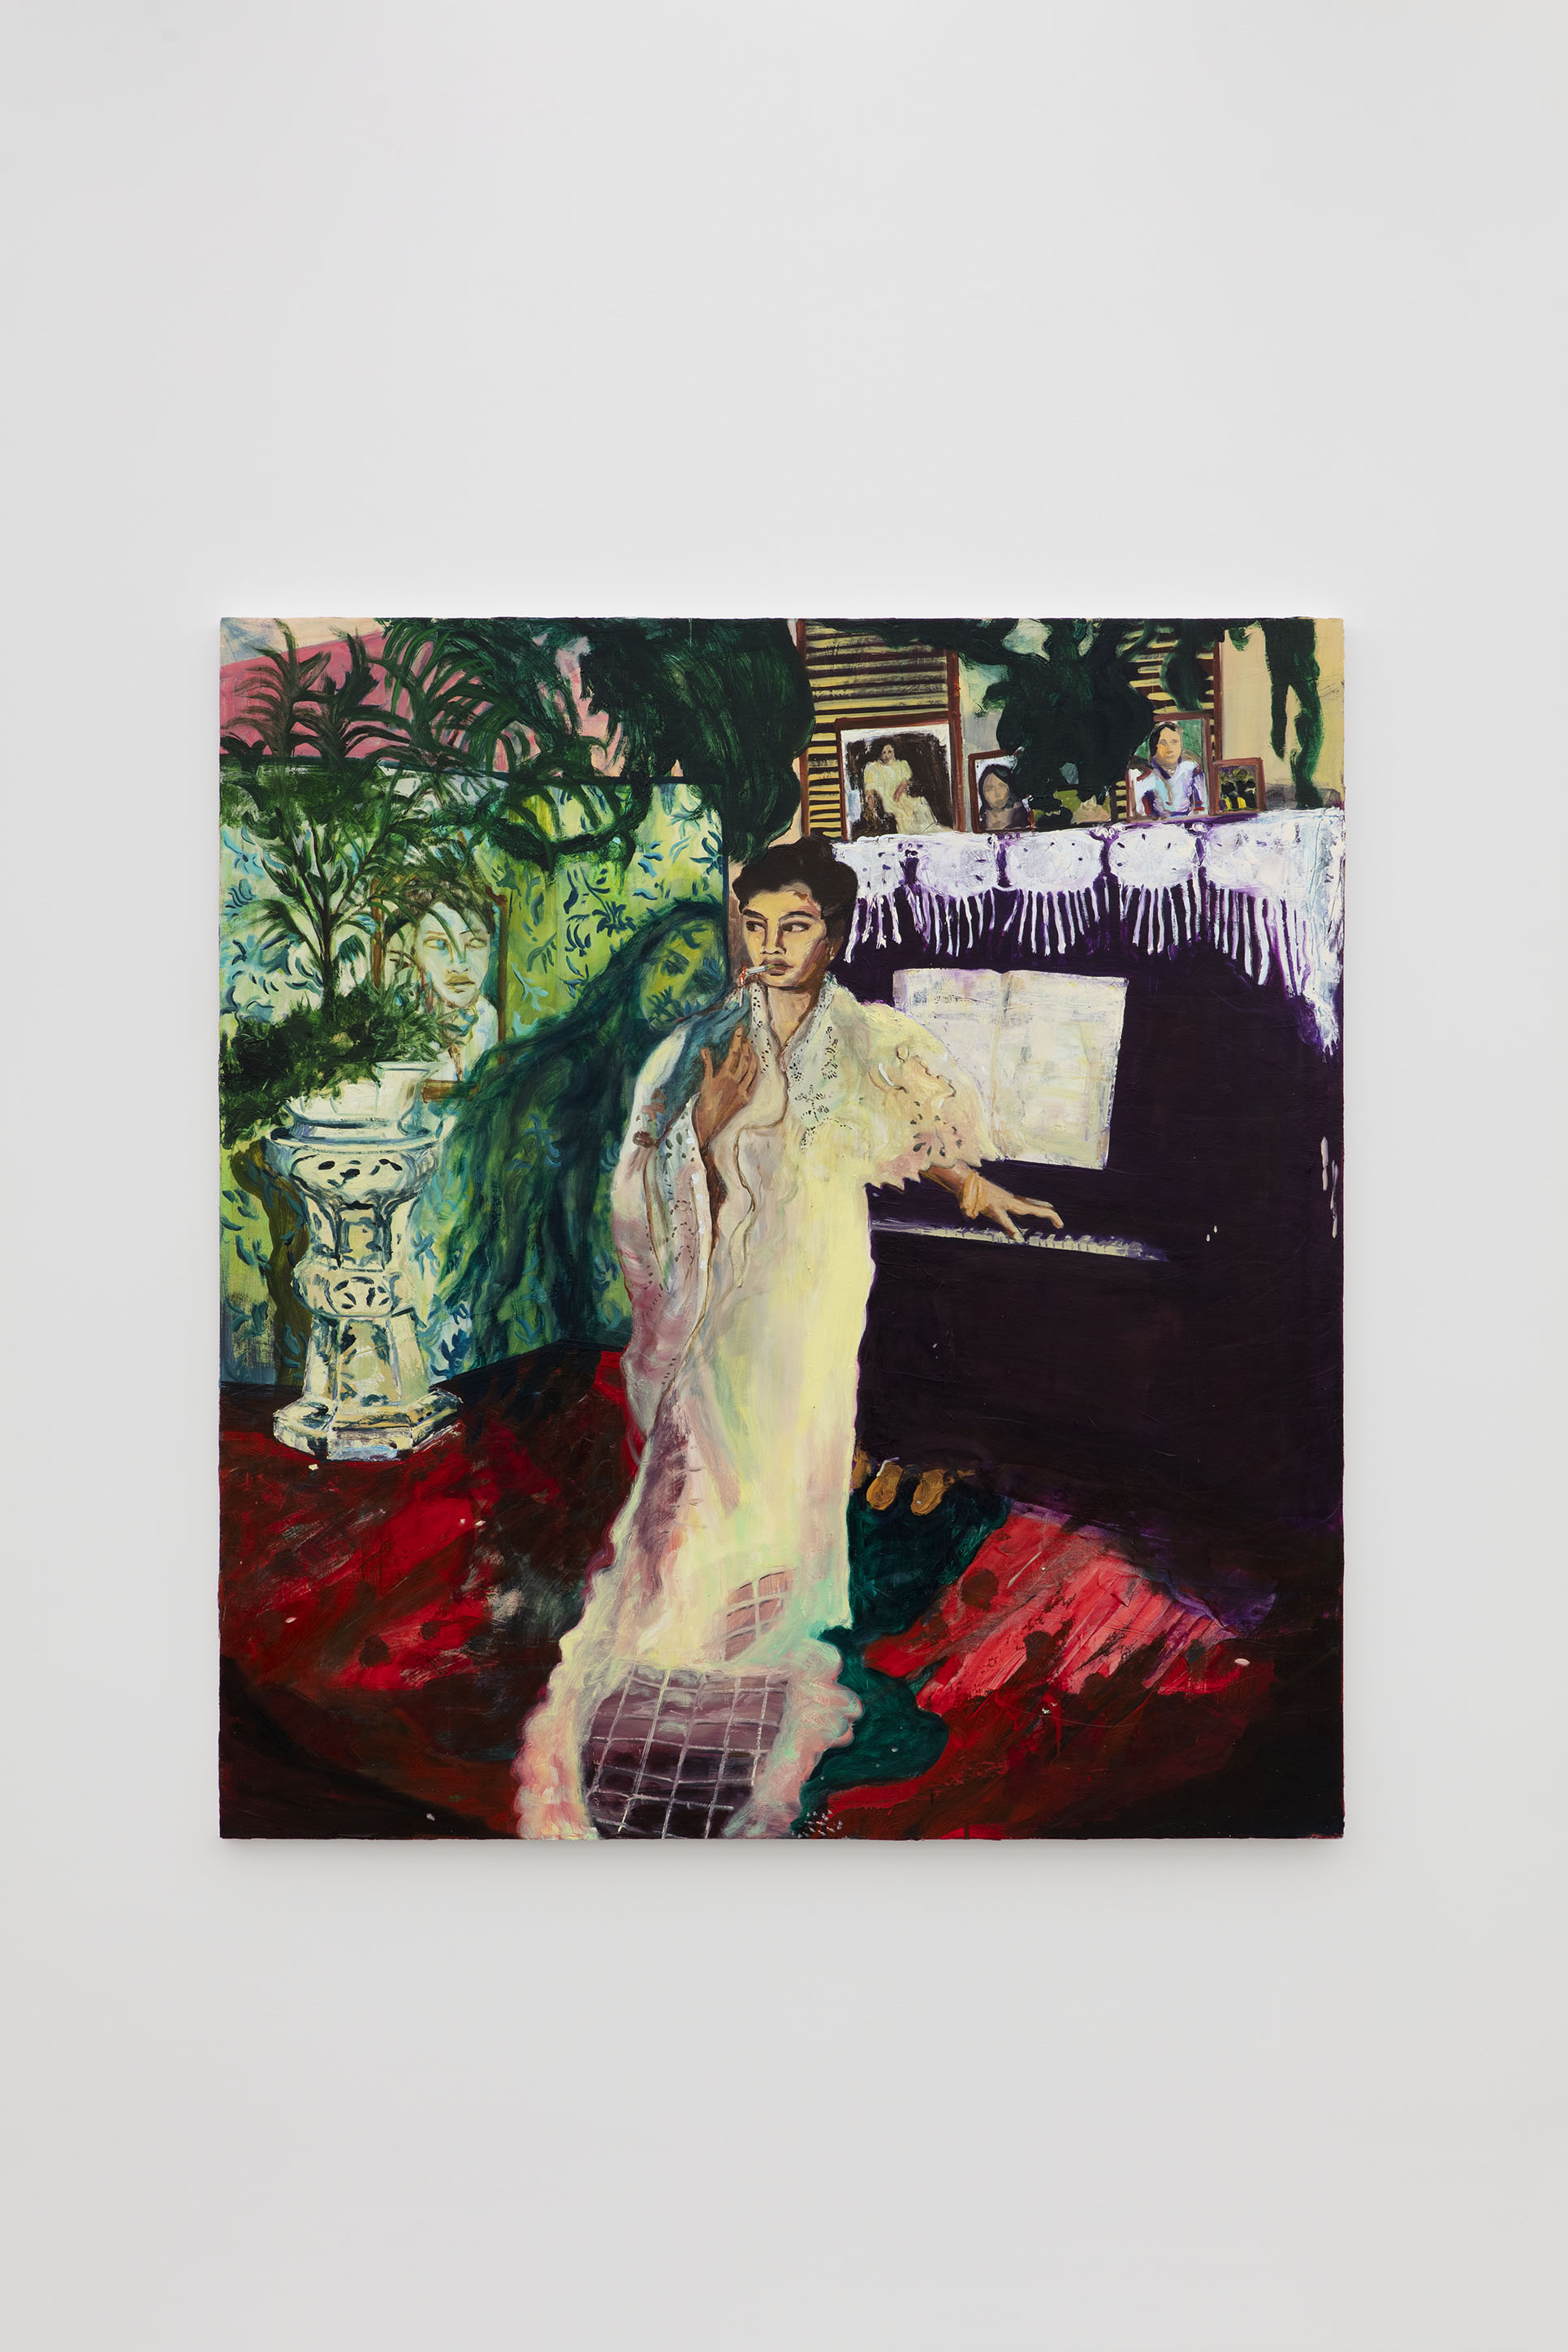 Maia Cruz Palileo. "The Duet", 2019. Oil on canvas. 183 x 168 cm 